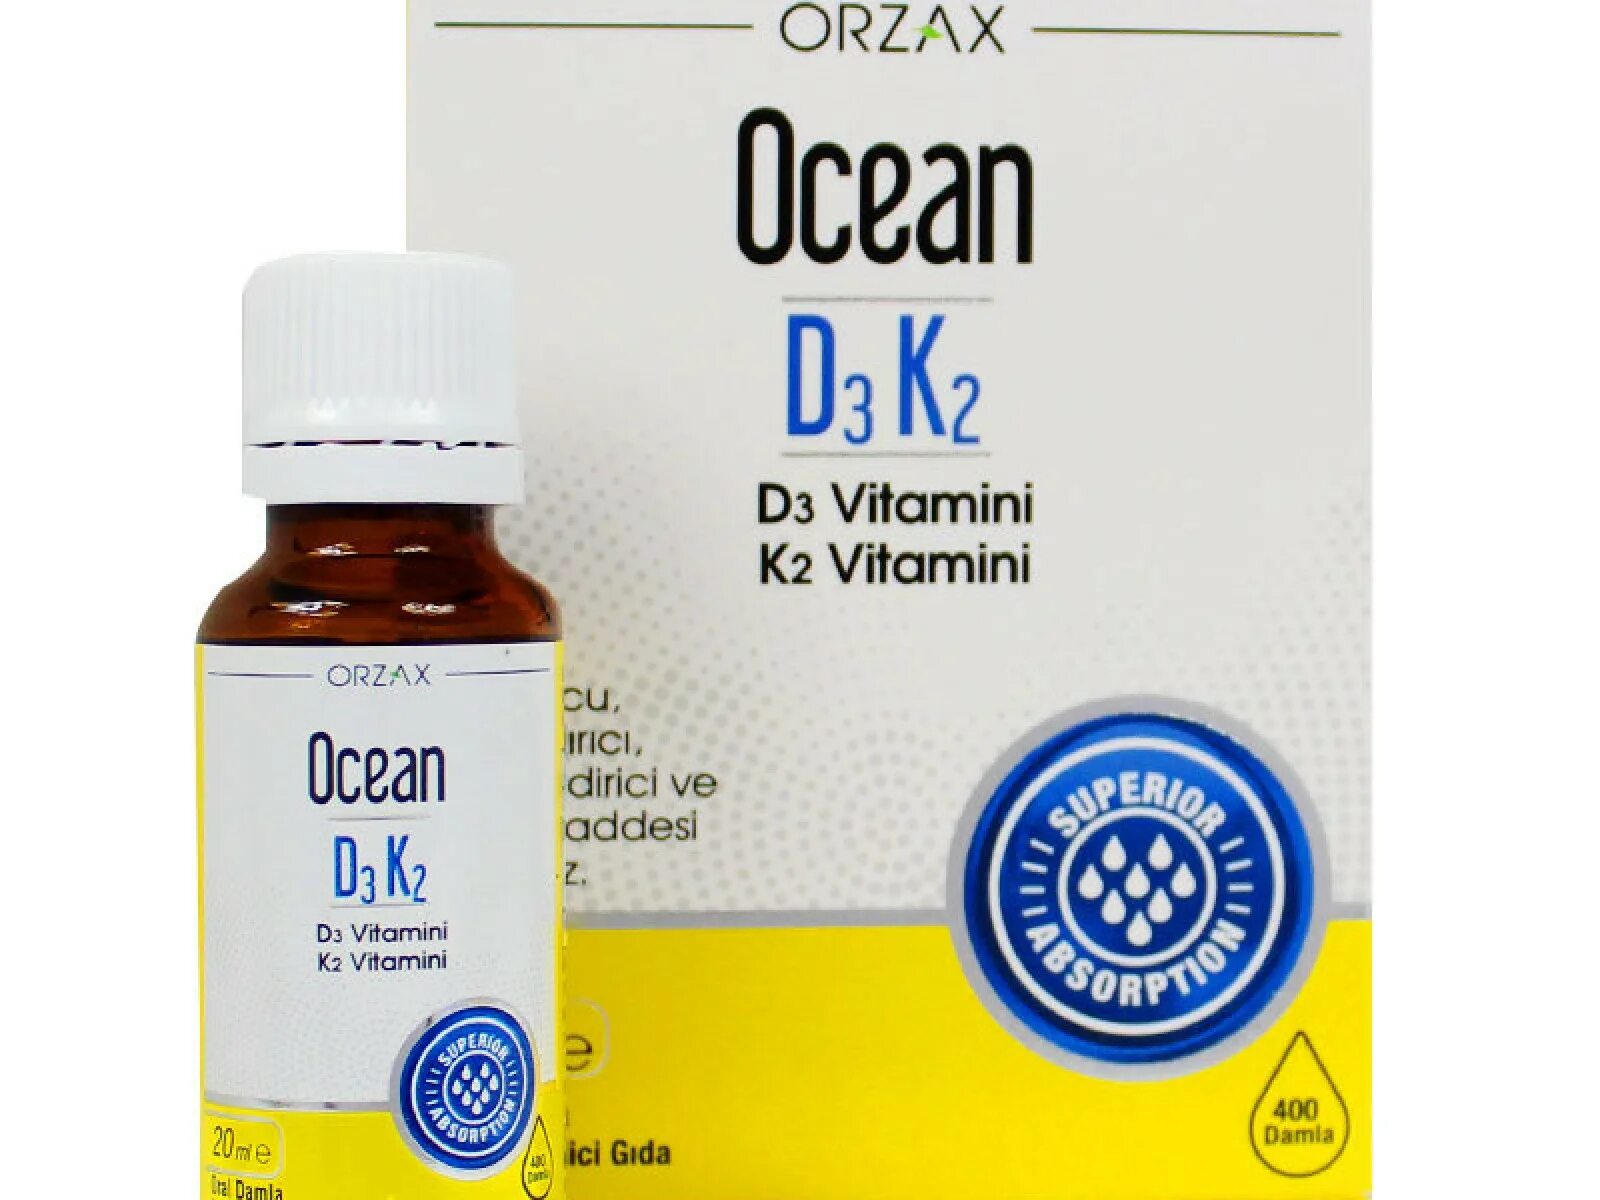 Ocean Vitamin d3 k2 Damla 20 ml. Orzax витамин д3 к2. Турецкий витамин д3 к2 Ocean. Ocean d3 k2 20ml "Orzax".